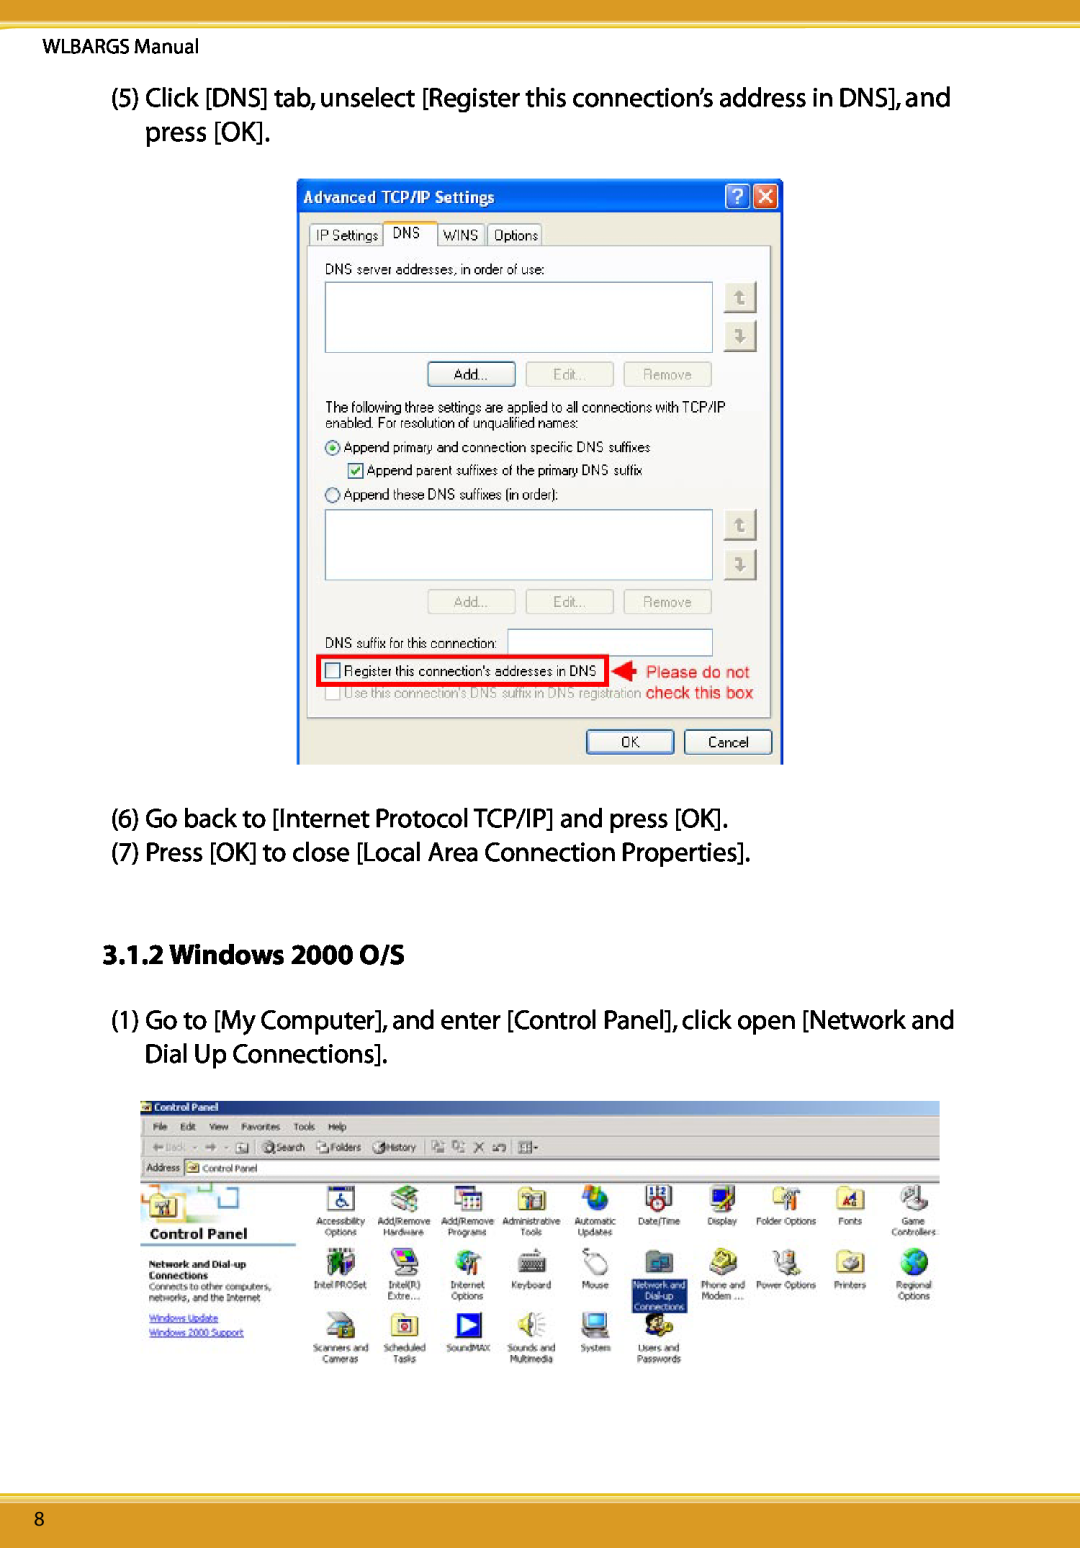 Allied Telesis CG-WLBARGS manual Windows 2000 O/S, Go back to Internet Protocol TCP/IP and press OK, WLBARGS Manual 